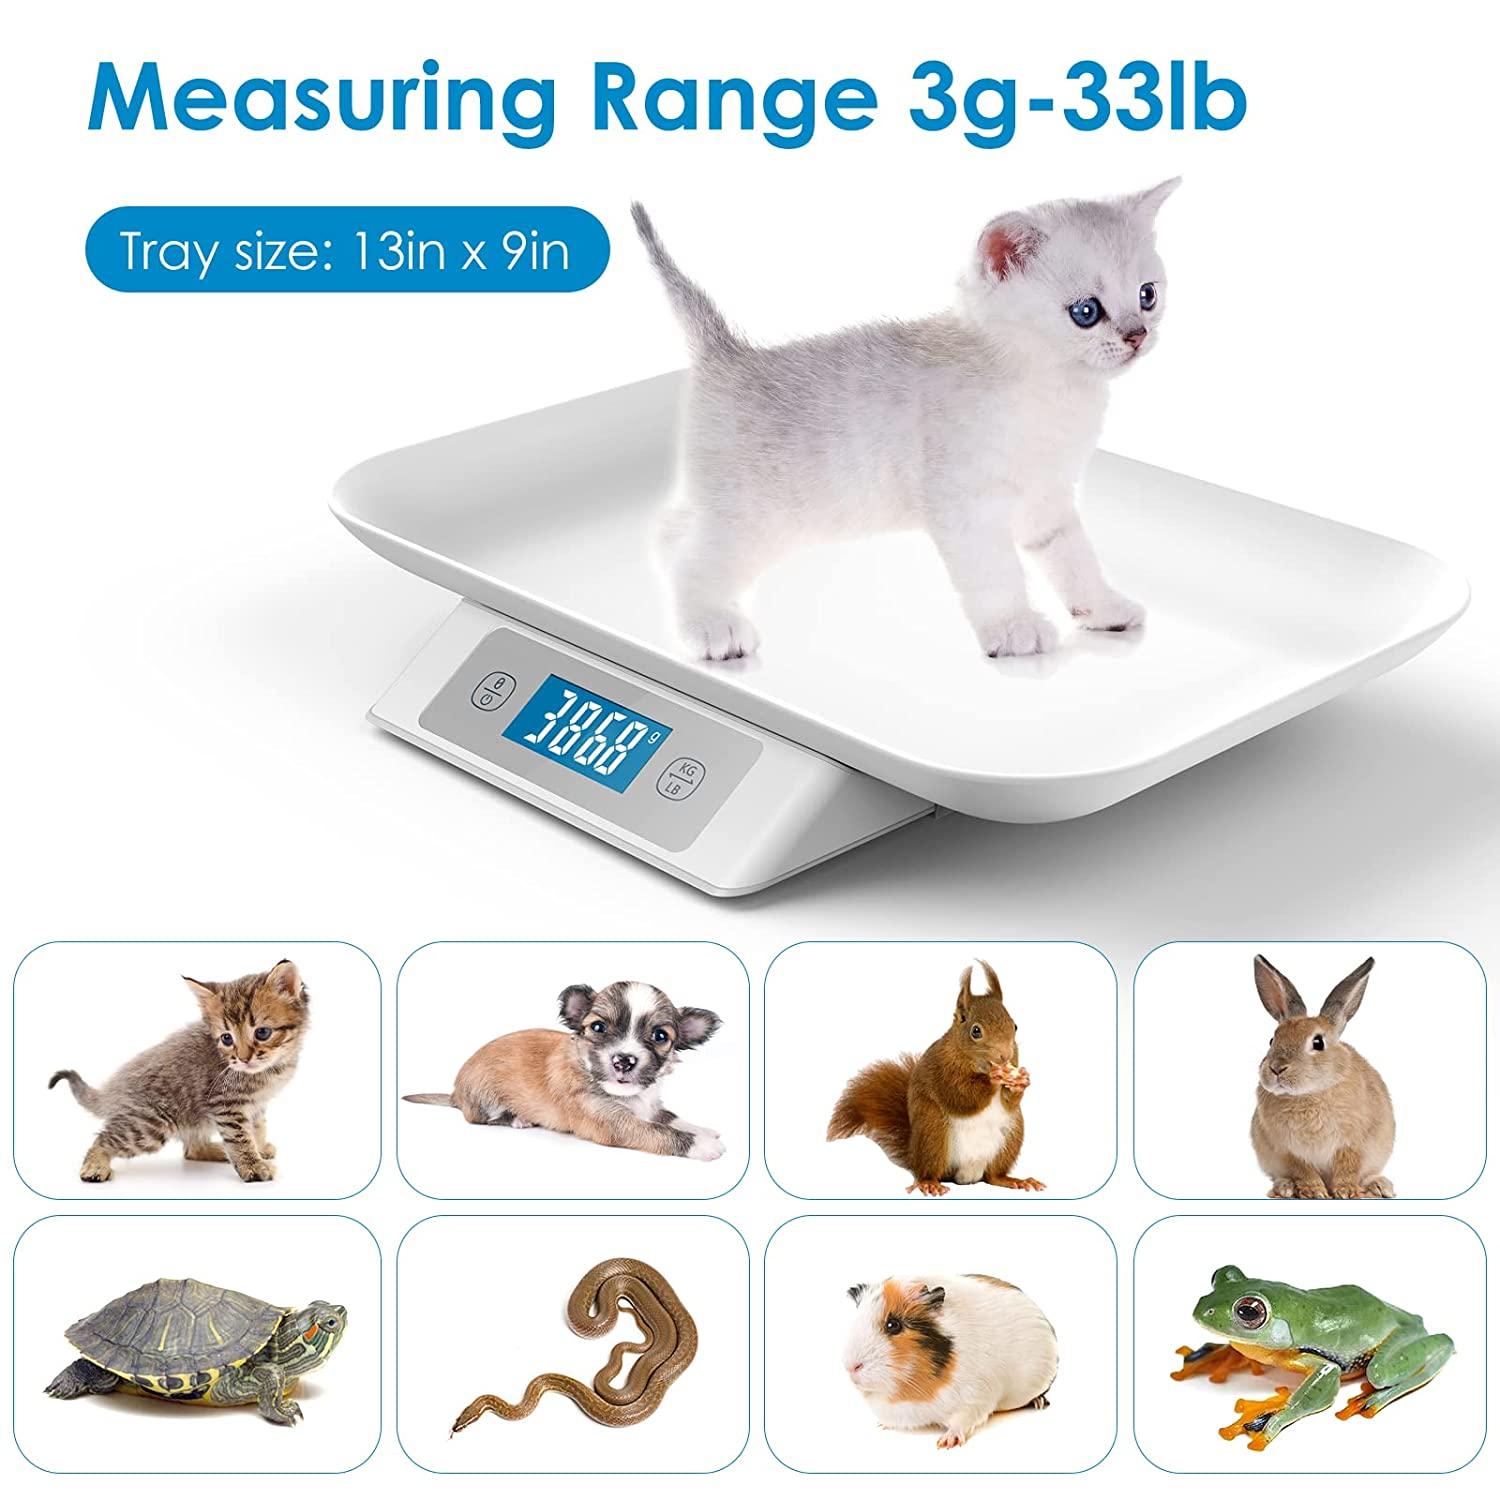 Mindpet-med Digital Pet Scale for Small Animal Accuracy 1g Measuring Range  3g-15000gUnit glboztlml Suitable for Kitten Puppy Rabbit Tortoise